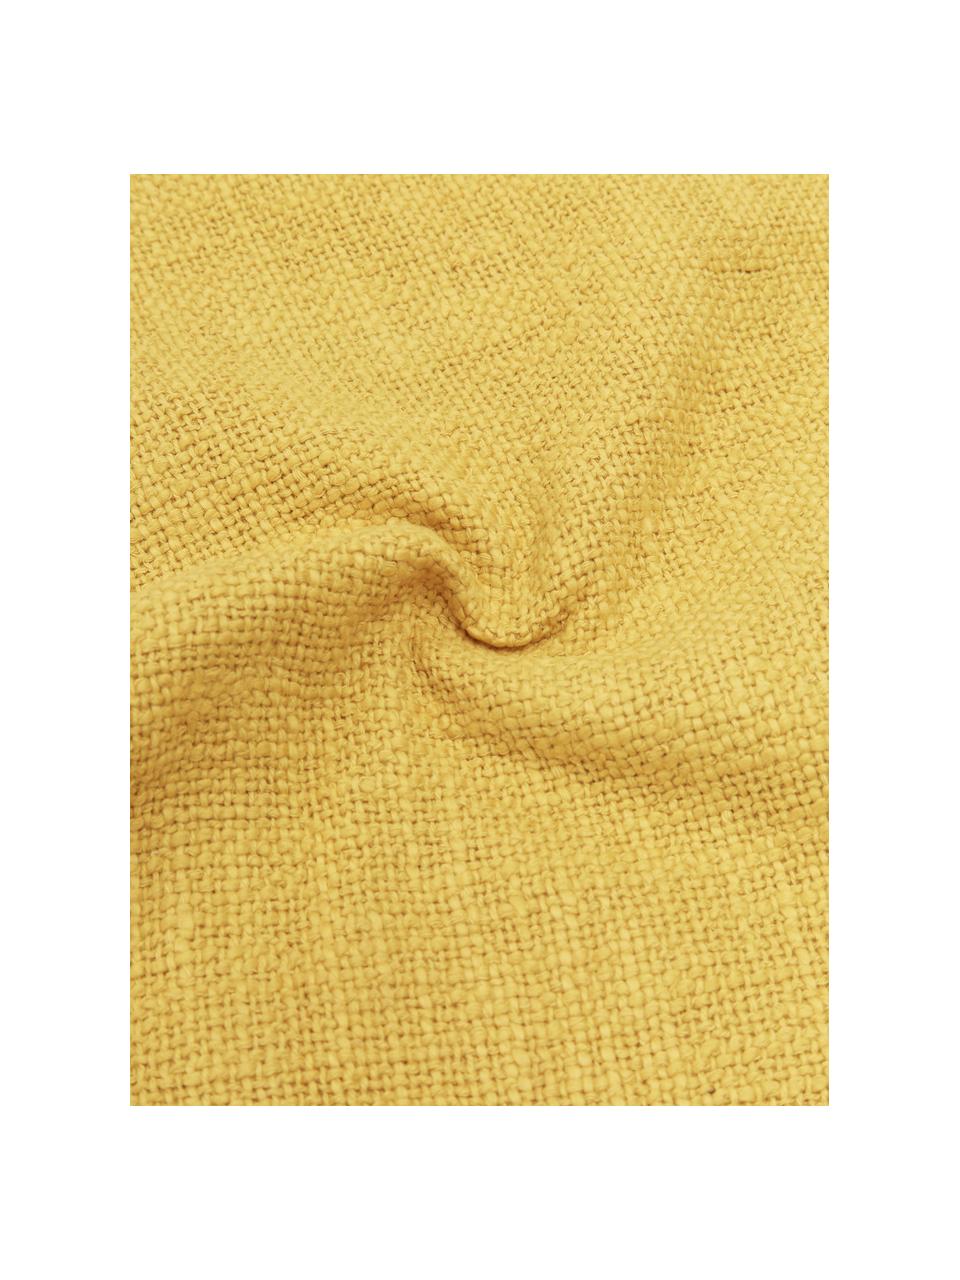 Kissenhülle Anise in Gelb, 100% Baumwolle, Gelb, B 30 x L 50 cm